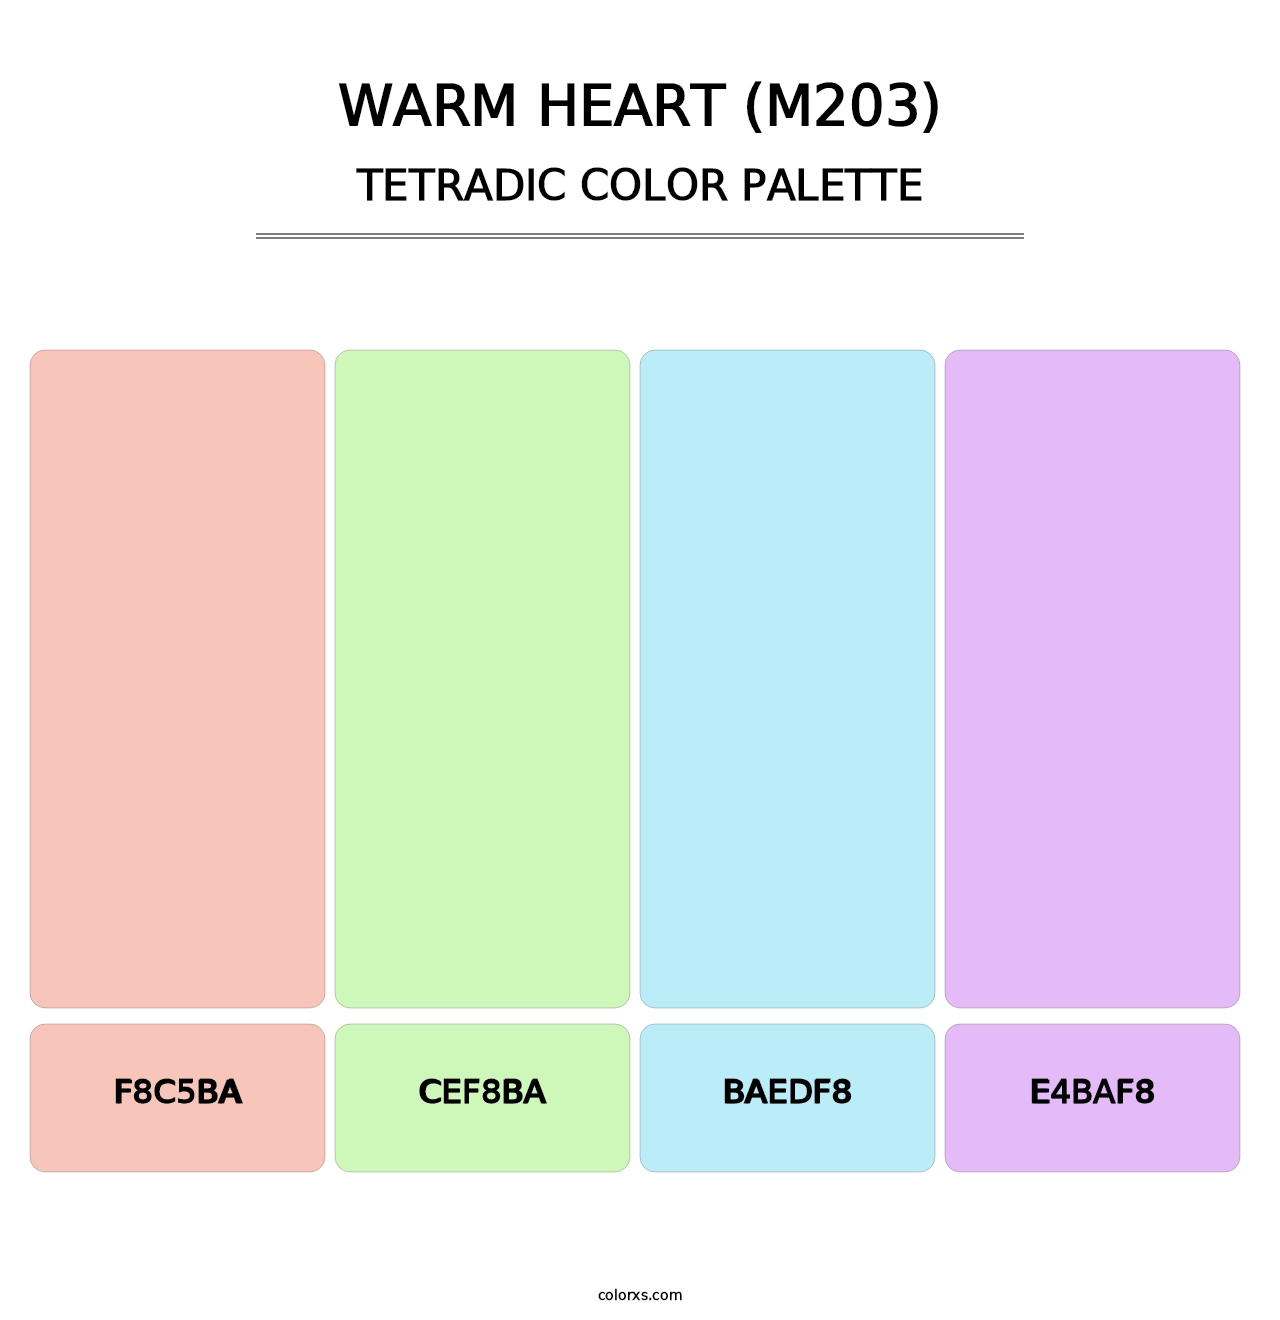 Warm Heart (M203) - Tetradic Color Palette